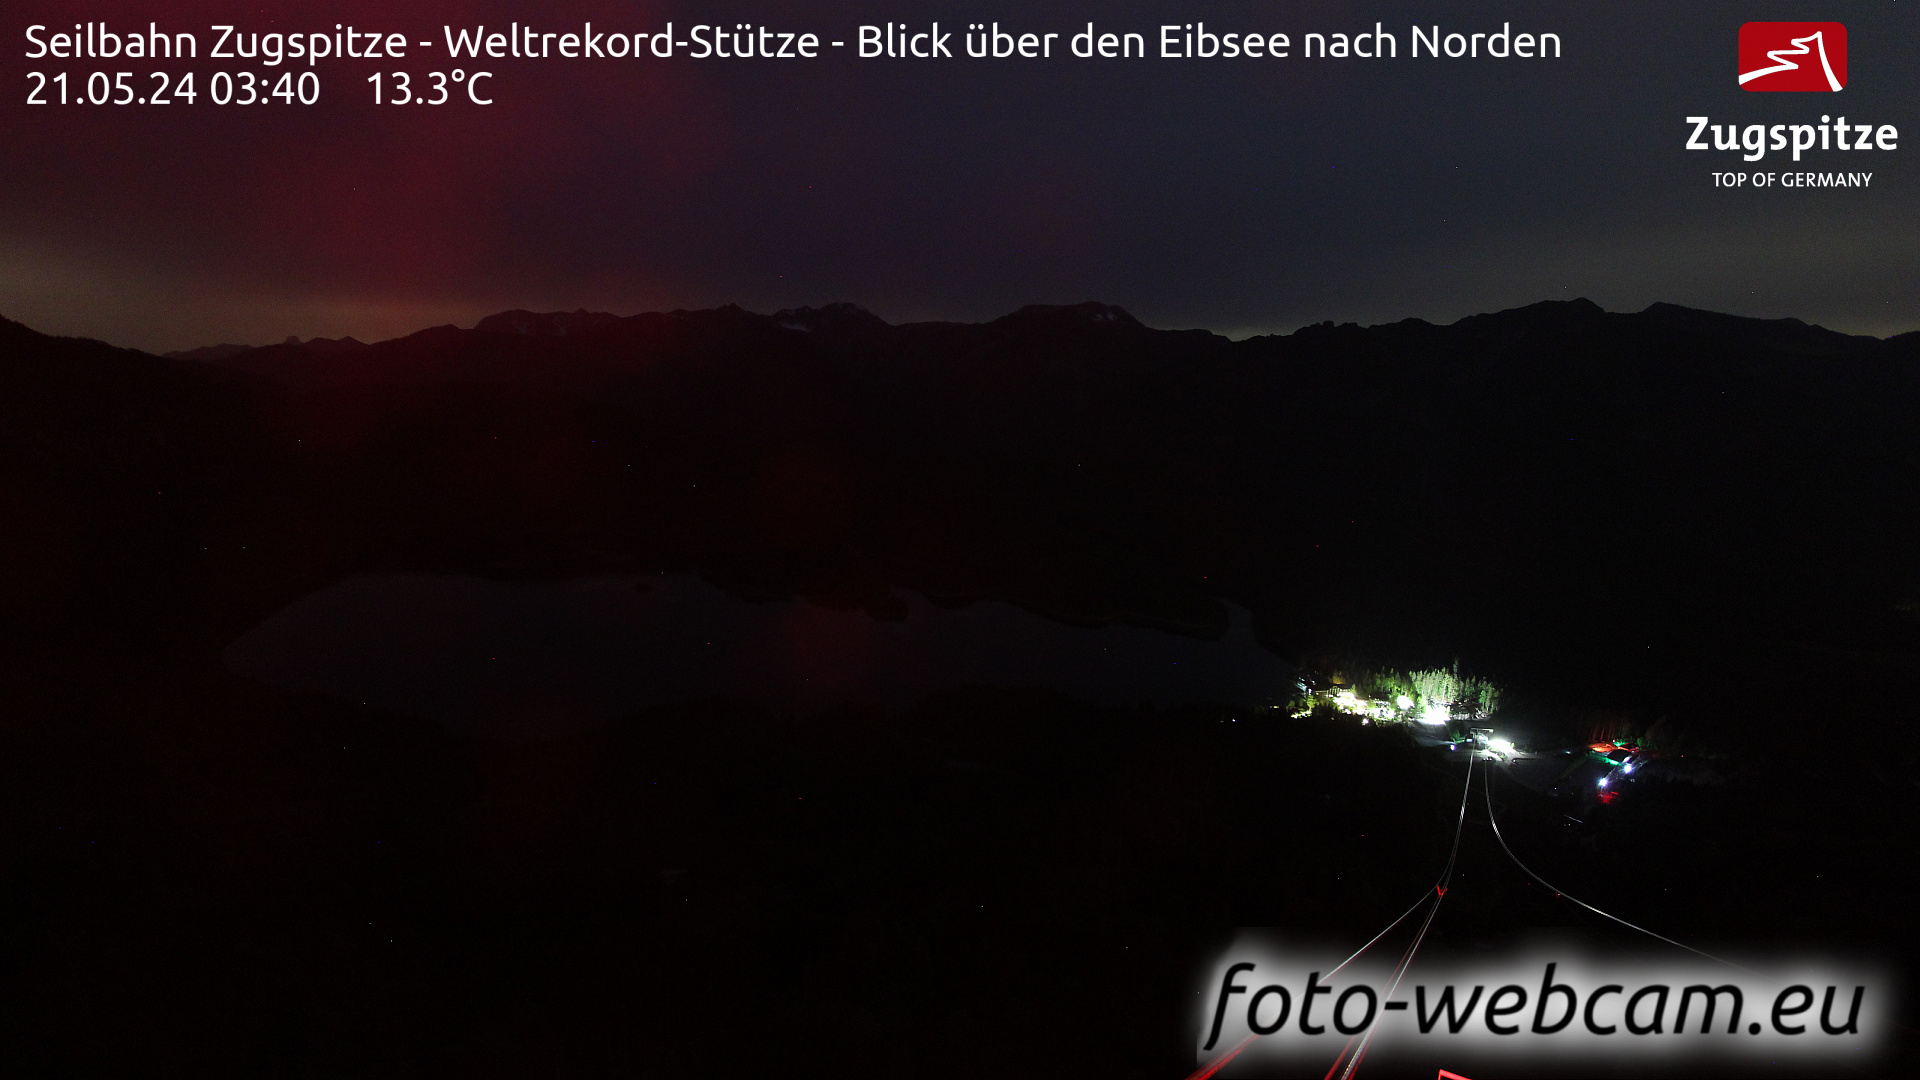 Zugspitze Mar. 03:49